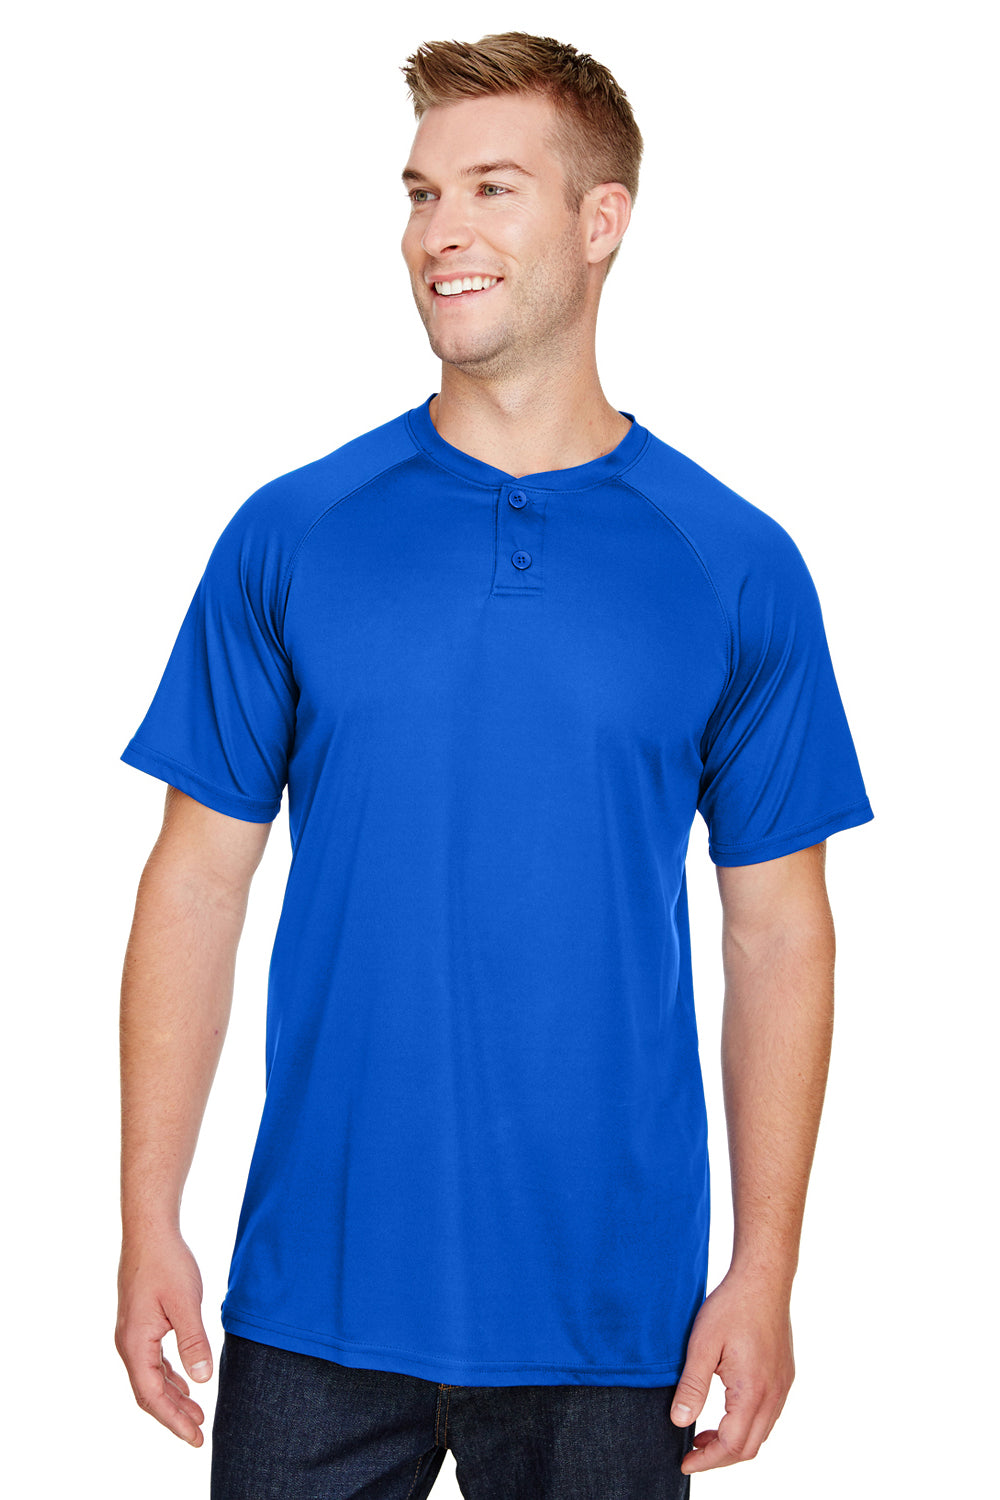 Augusta Sportswear AG1565 Mens Attain 2 Moisture Wicking Button Short Sleeve Baseball Jersey Royal Blue Model Front